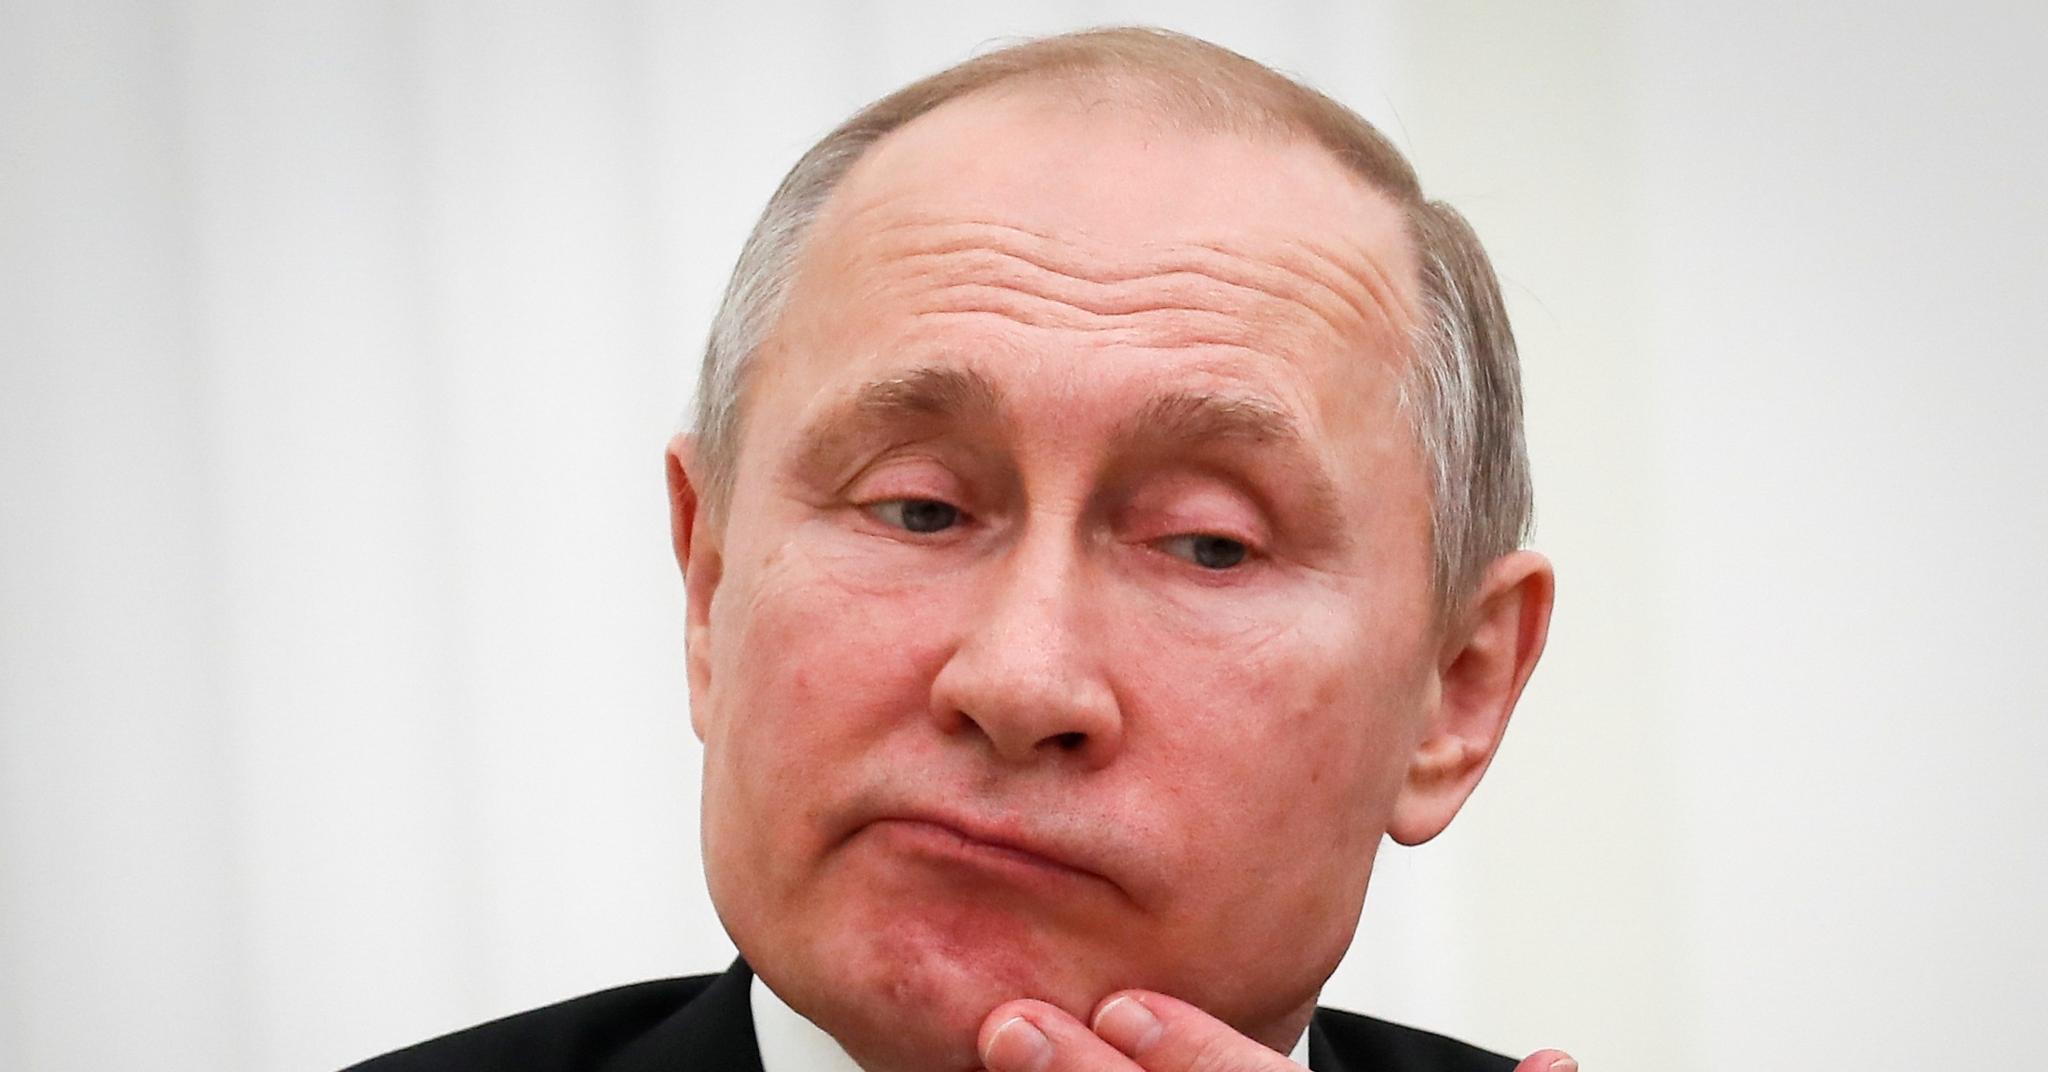 Mange eksperter og politikere lurer på hva som foregår i Russlands president Vladimir Putins hode i disse dager.